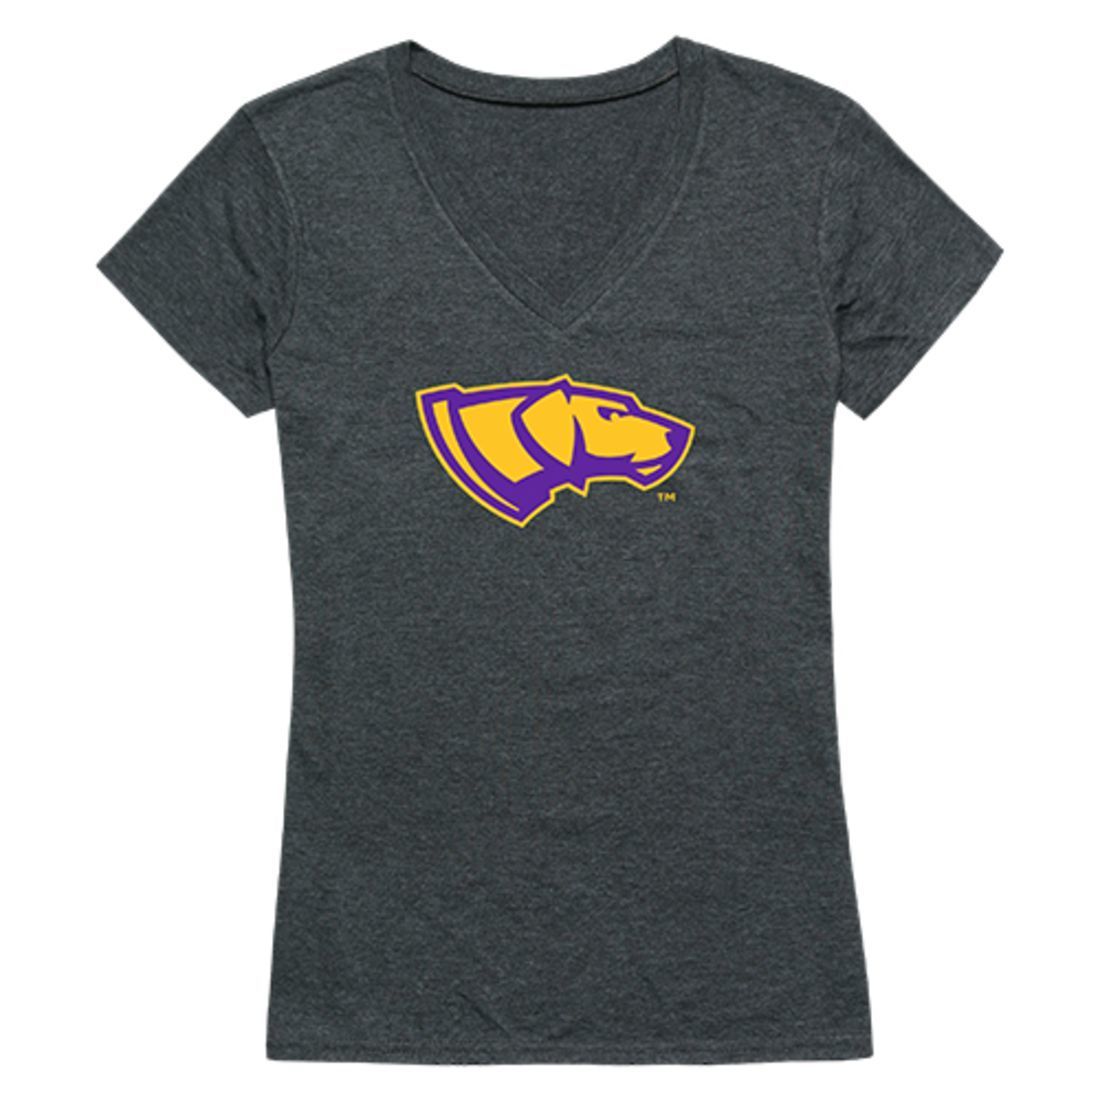 UWSP University of Wisconsin Stevens Point Pointers Womens Cinder T-Shirt Heather Charcoal-Campus-Wardrobe